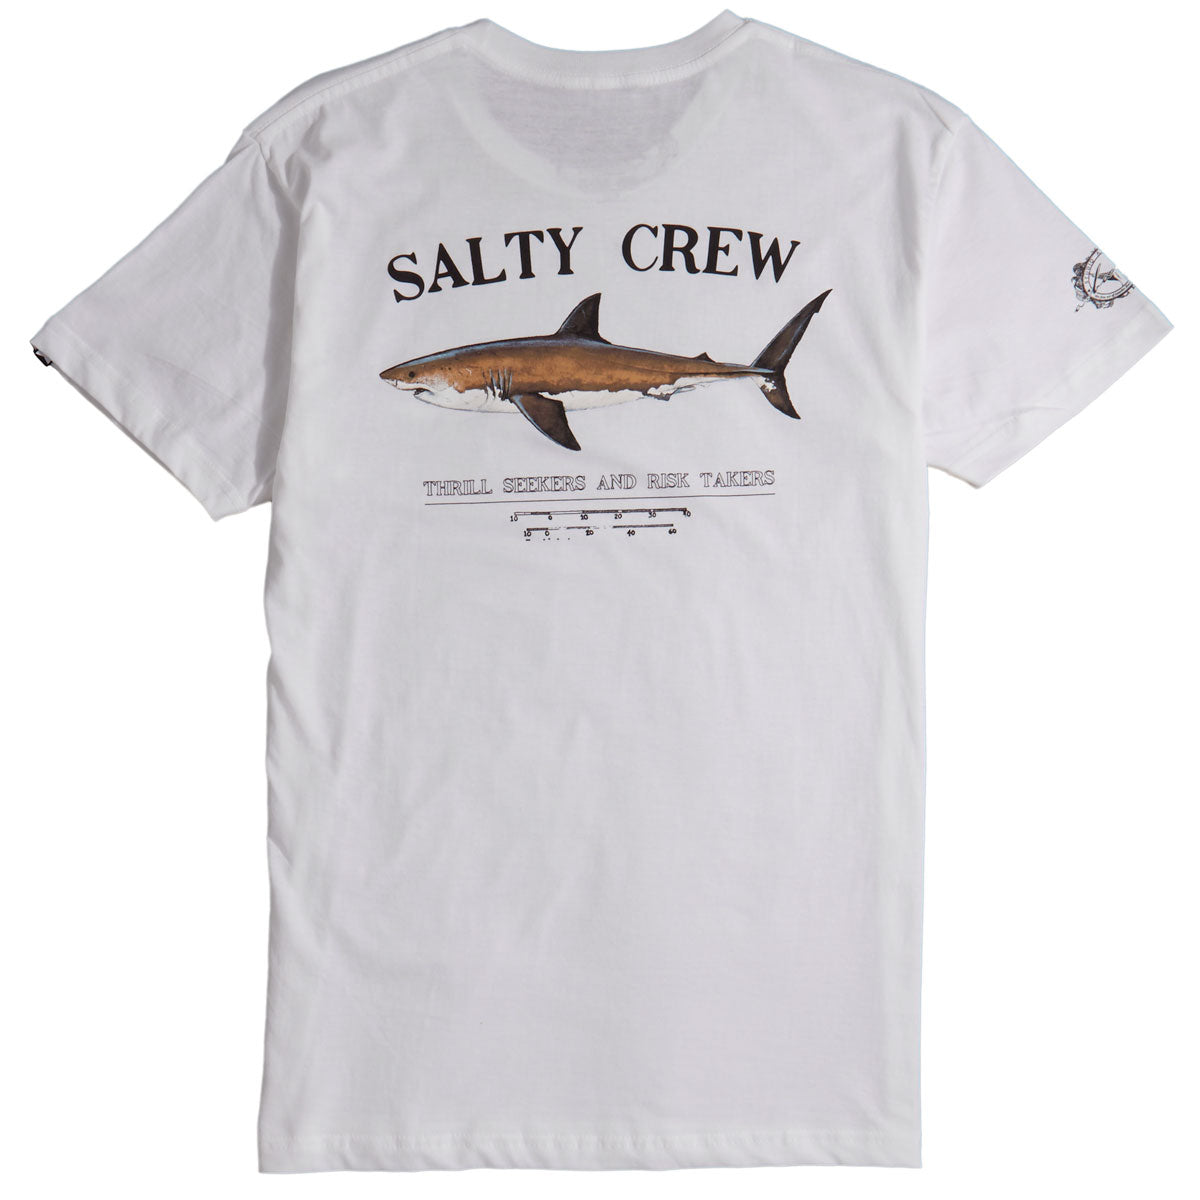 Salty Crew Bruce T-Shirt - White image 2